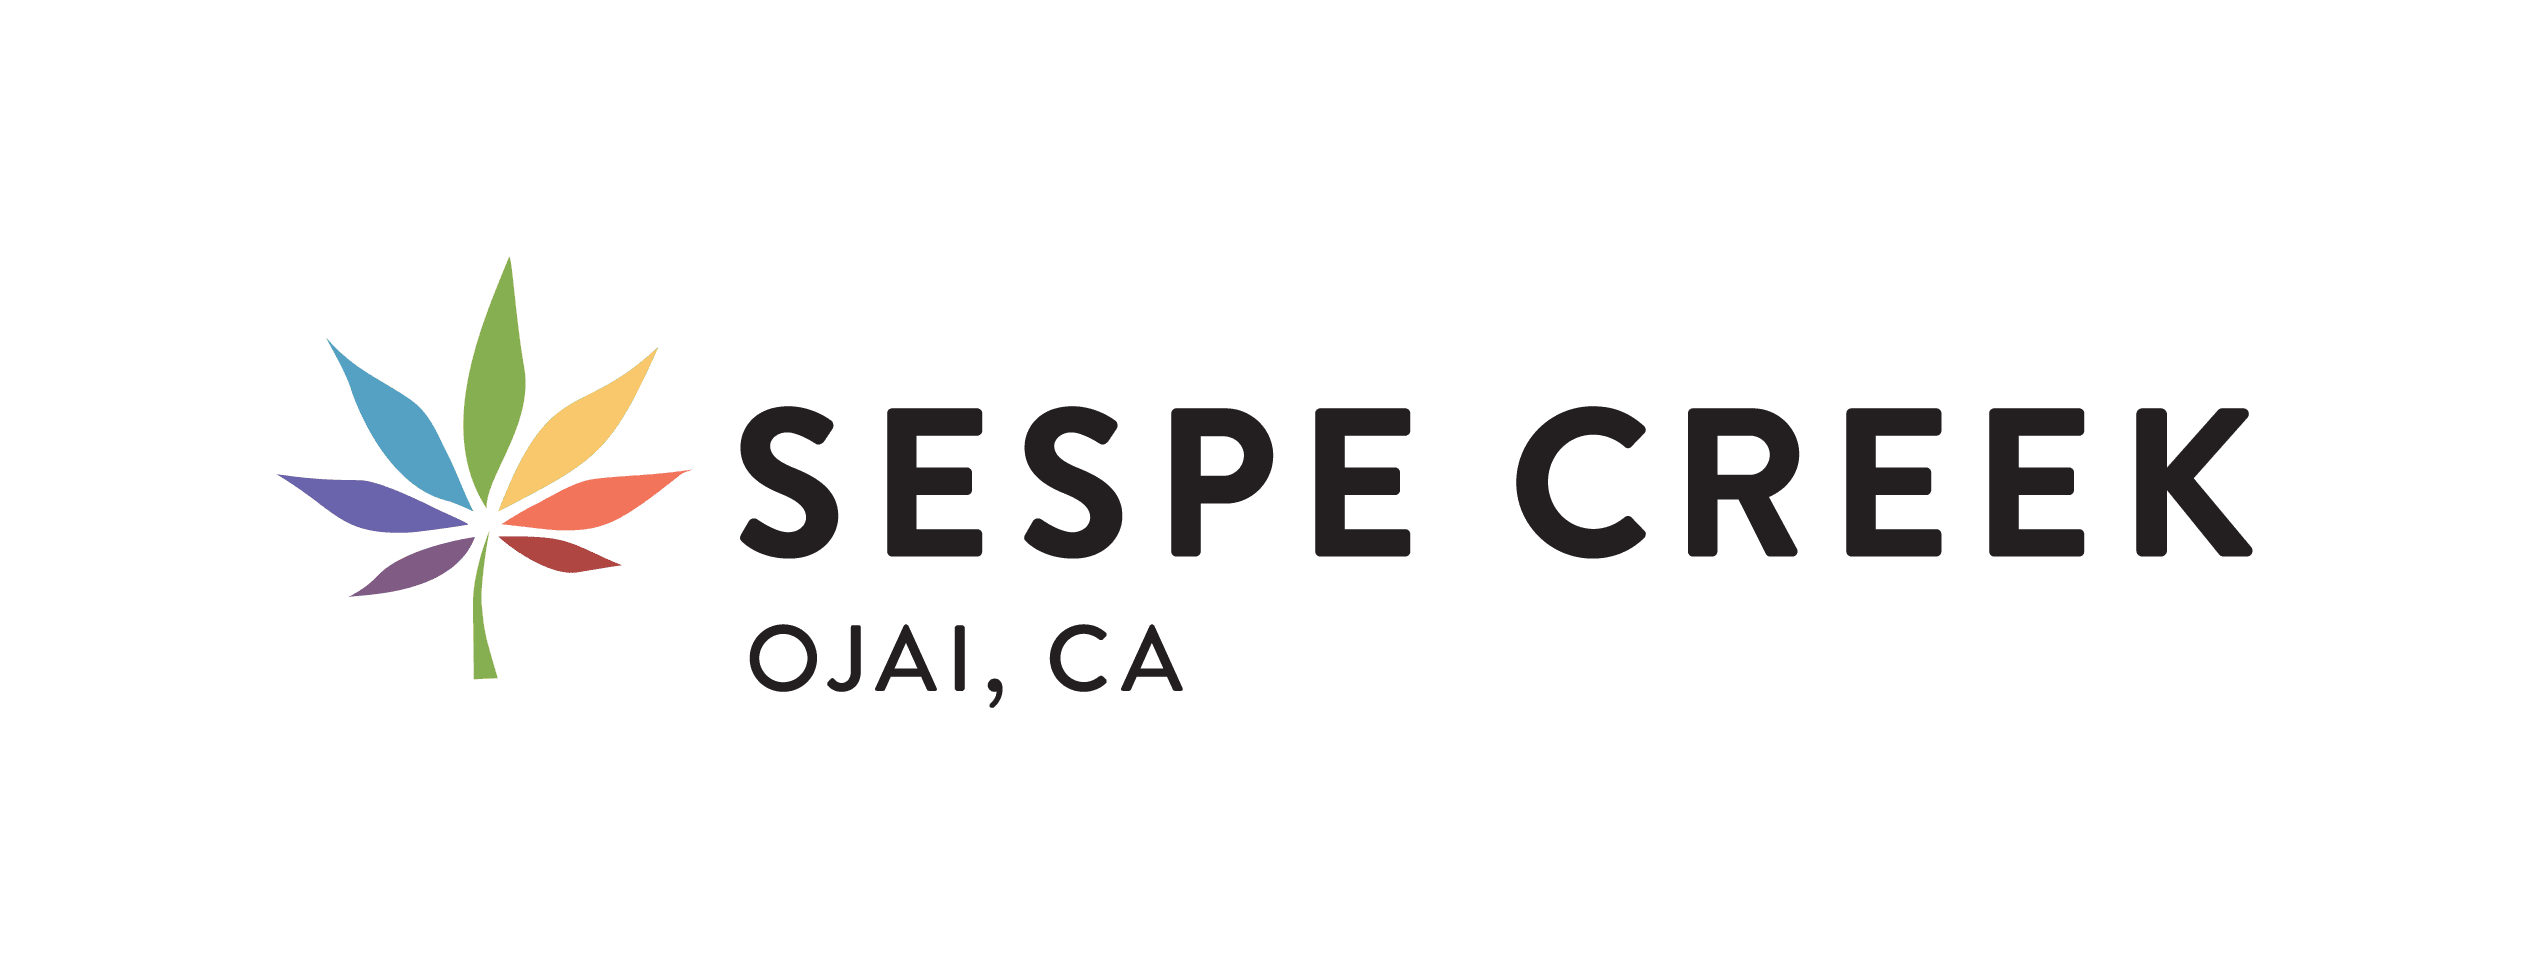 Sespe Creek